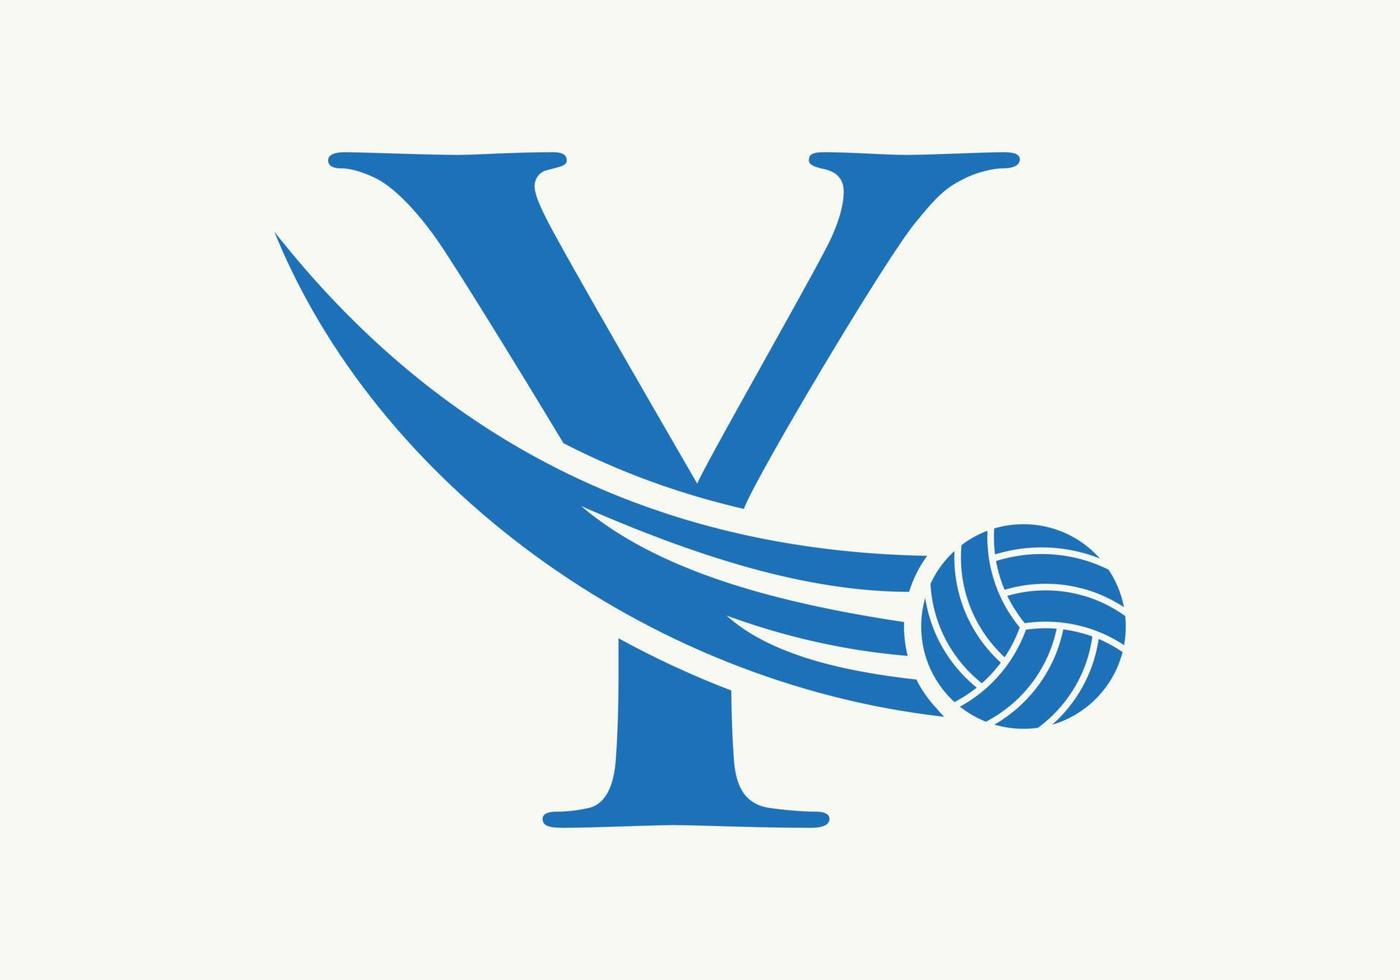 signe de conception de logo lettre y volley-ball. modèle de vecteur de symbole de logo de sport de volley-ball